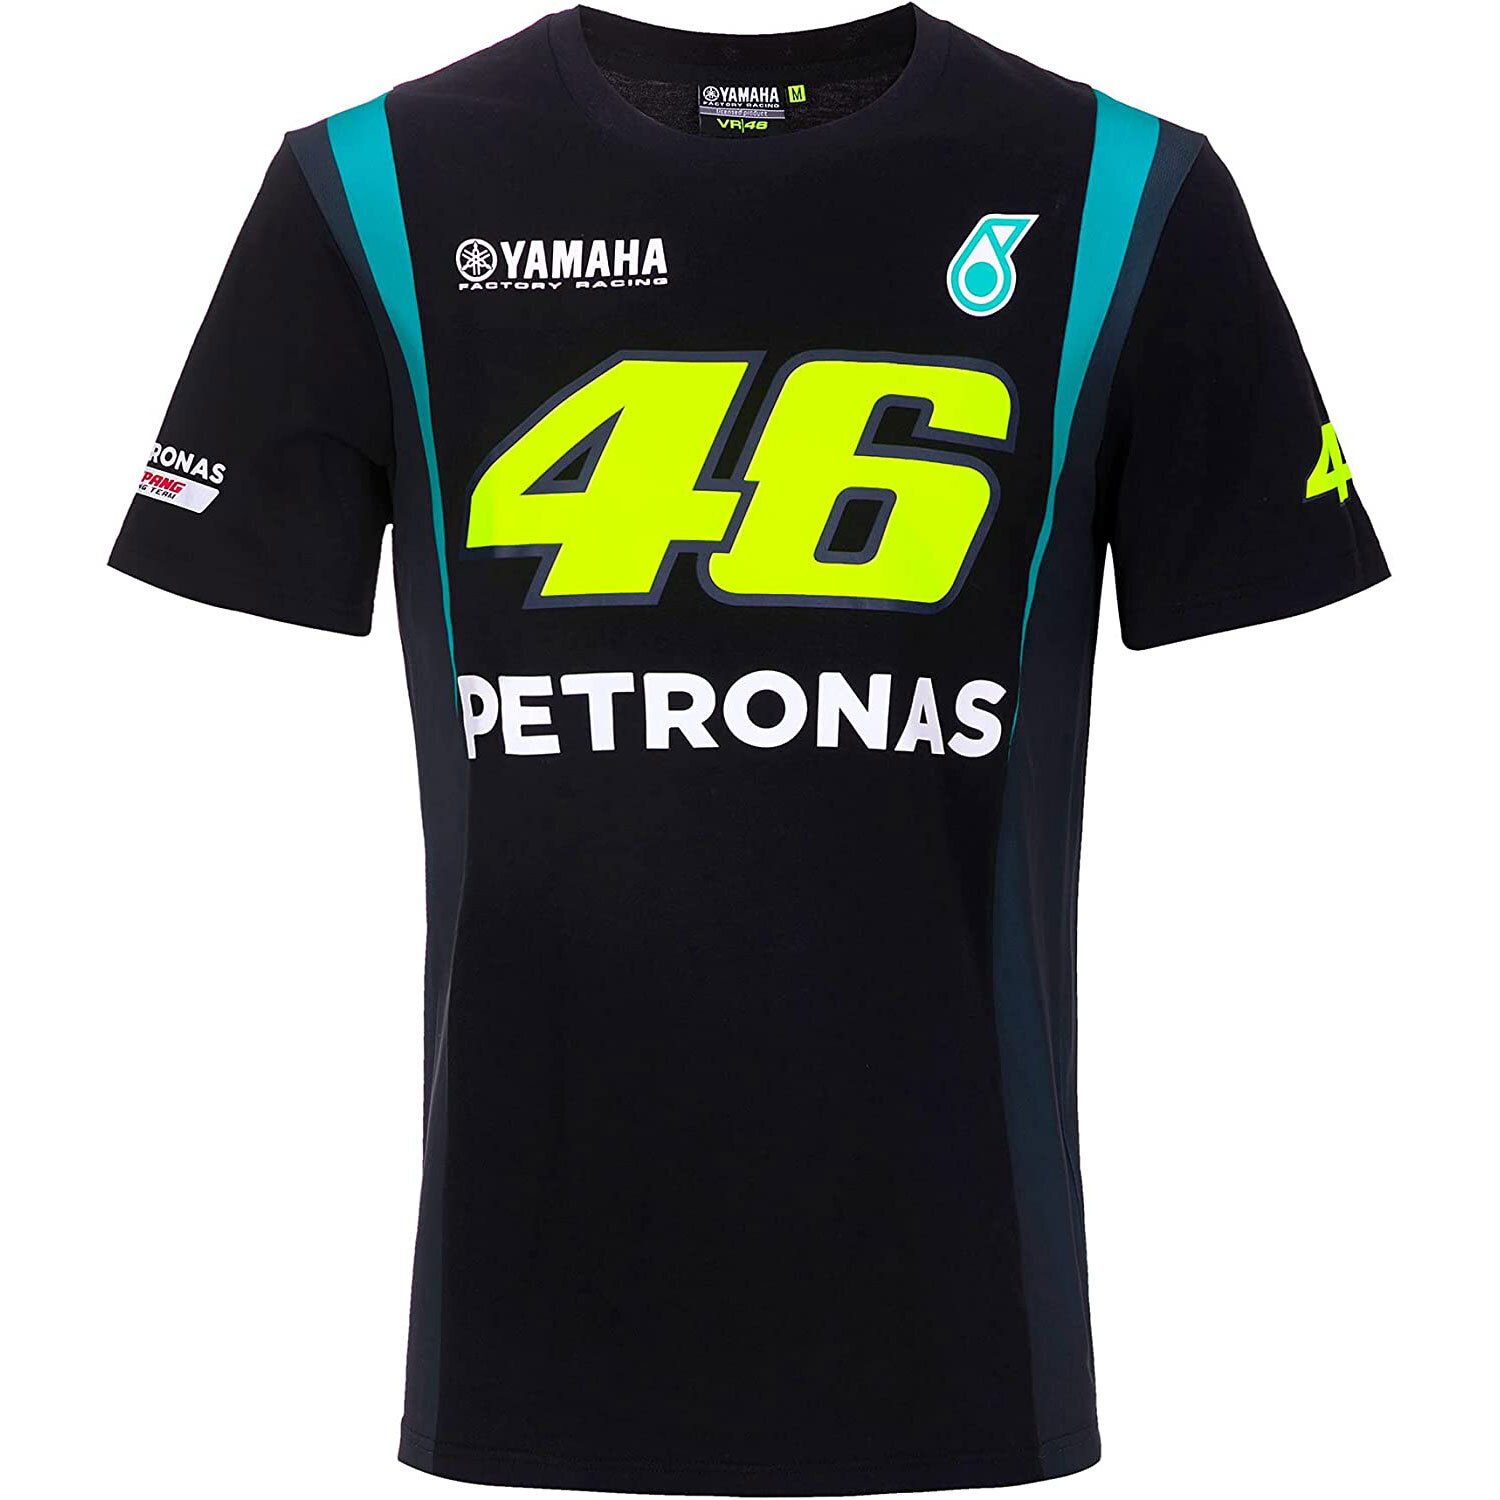 2021 Yamaha/Rossi/Petronas Replica Tshirt